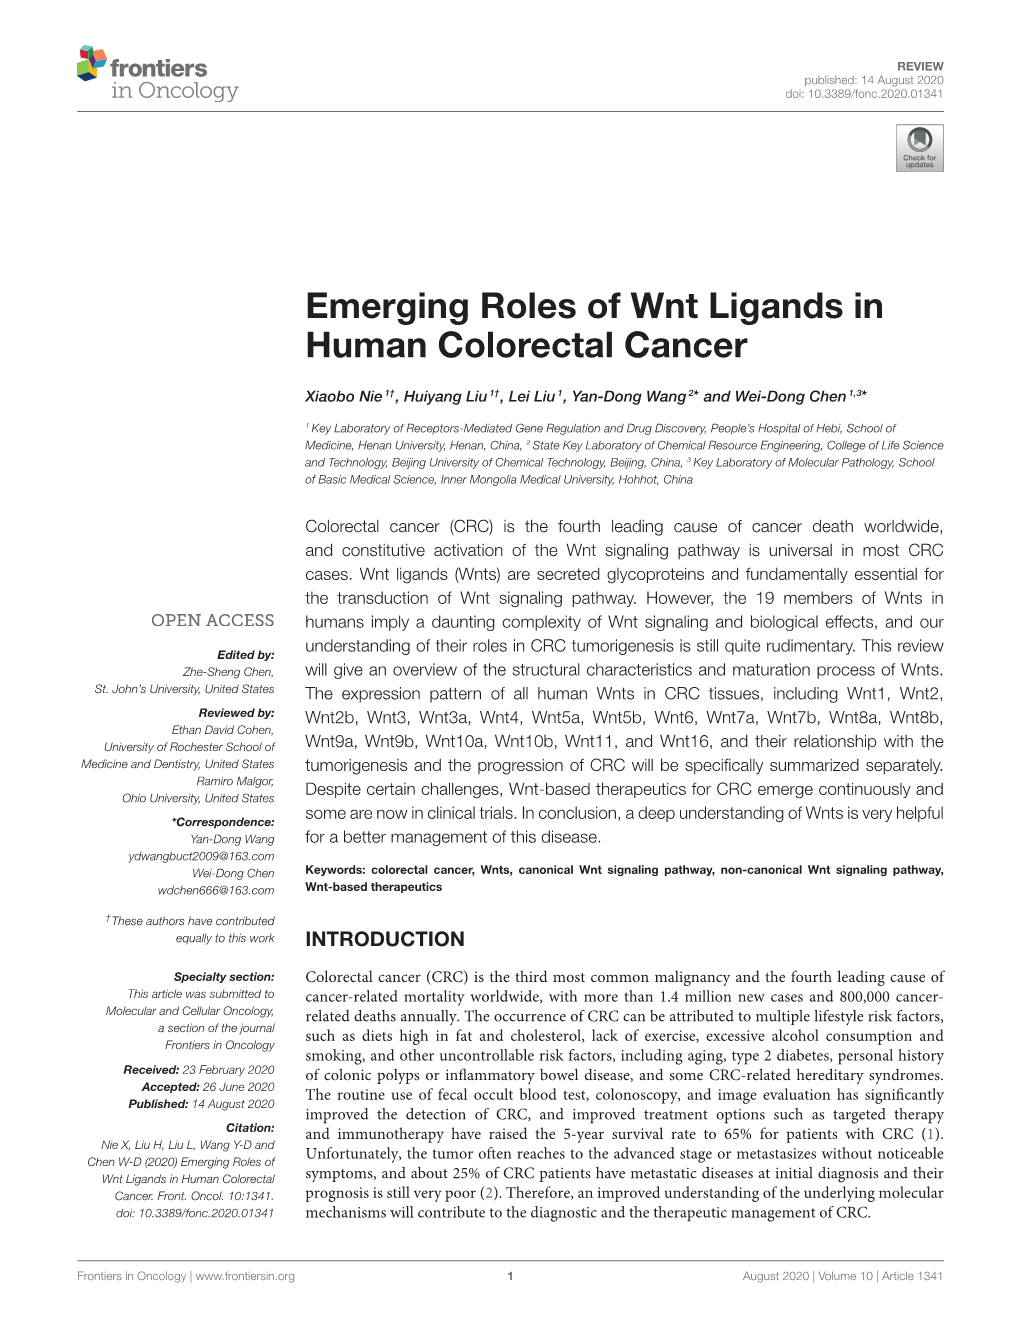 Emerging Roles of Wnt Ligands in Human Colorectal Cancer